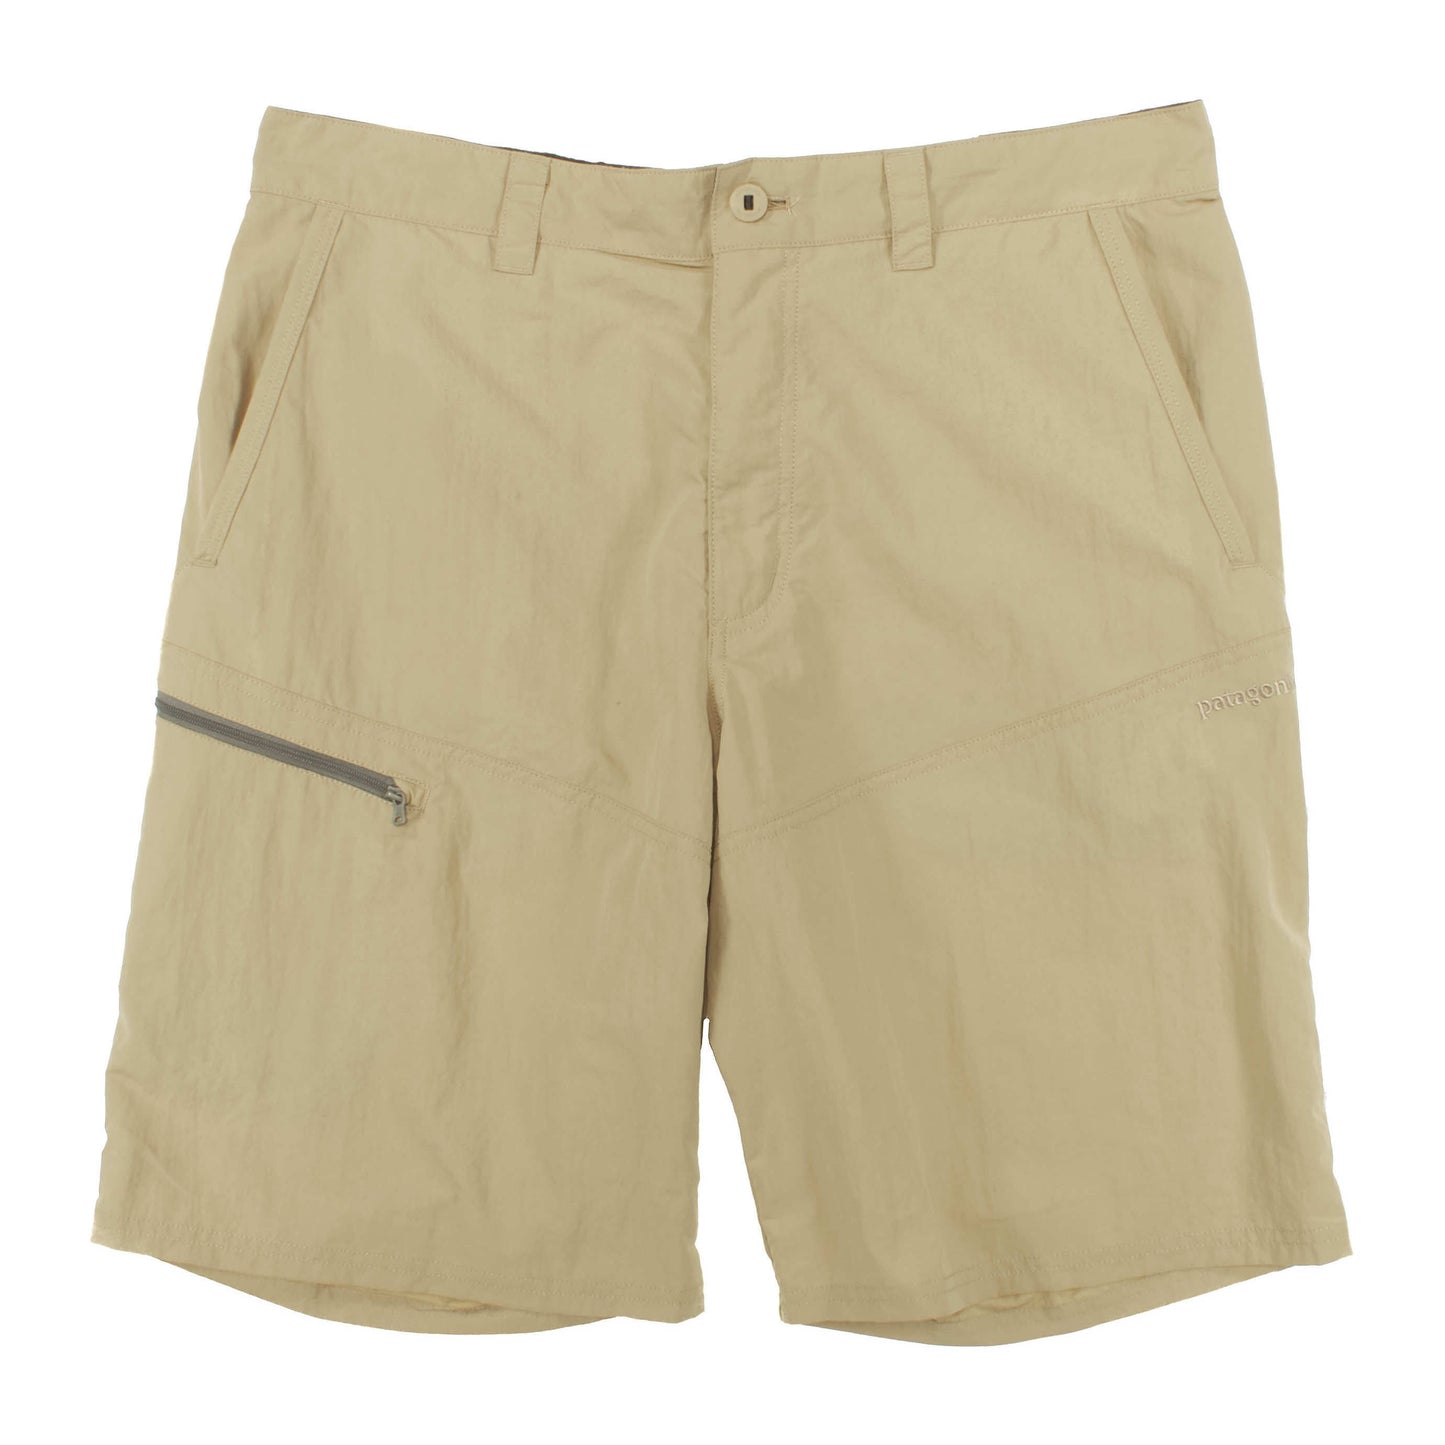 Men's Sandy Cay Shorts - 8"